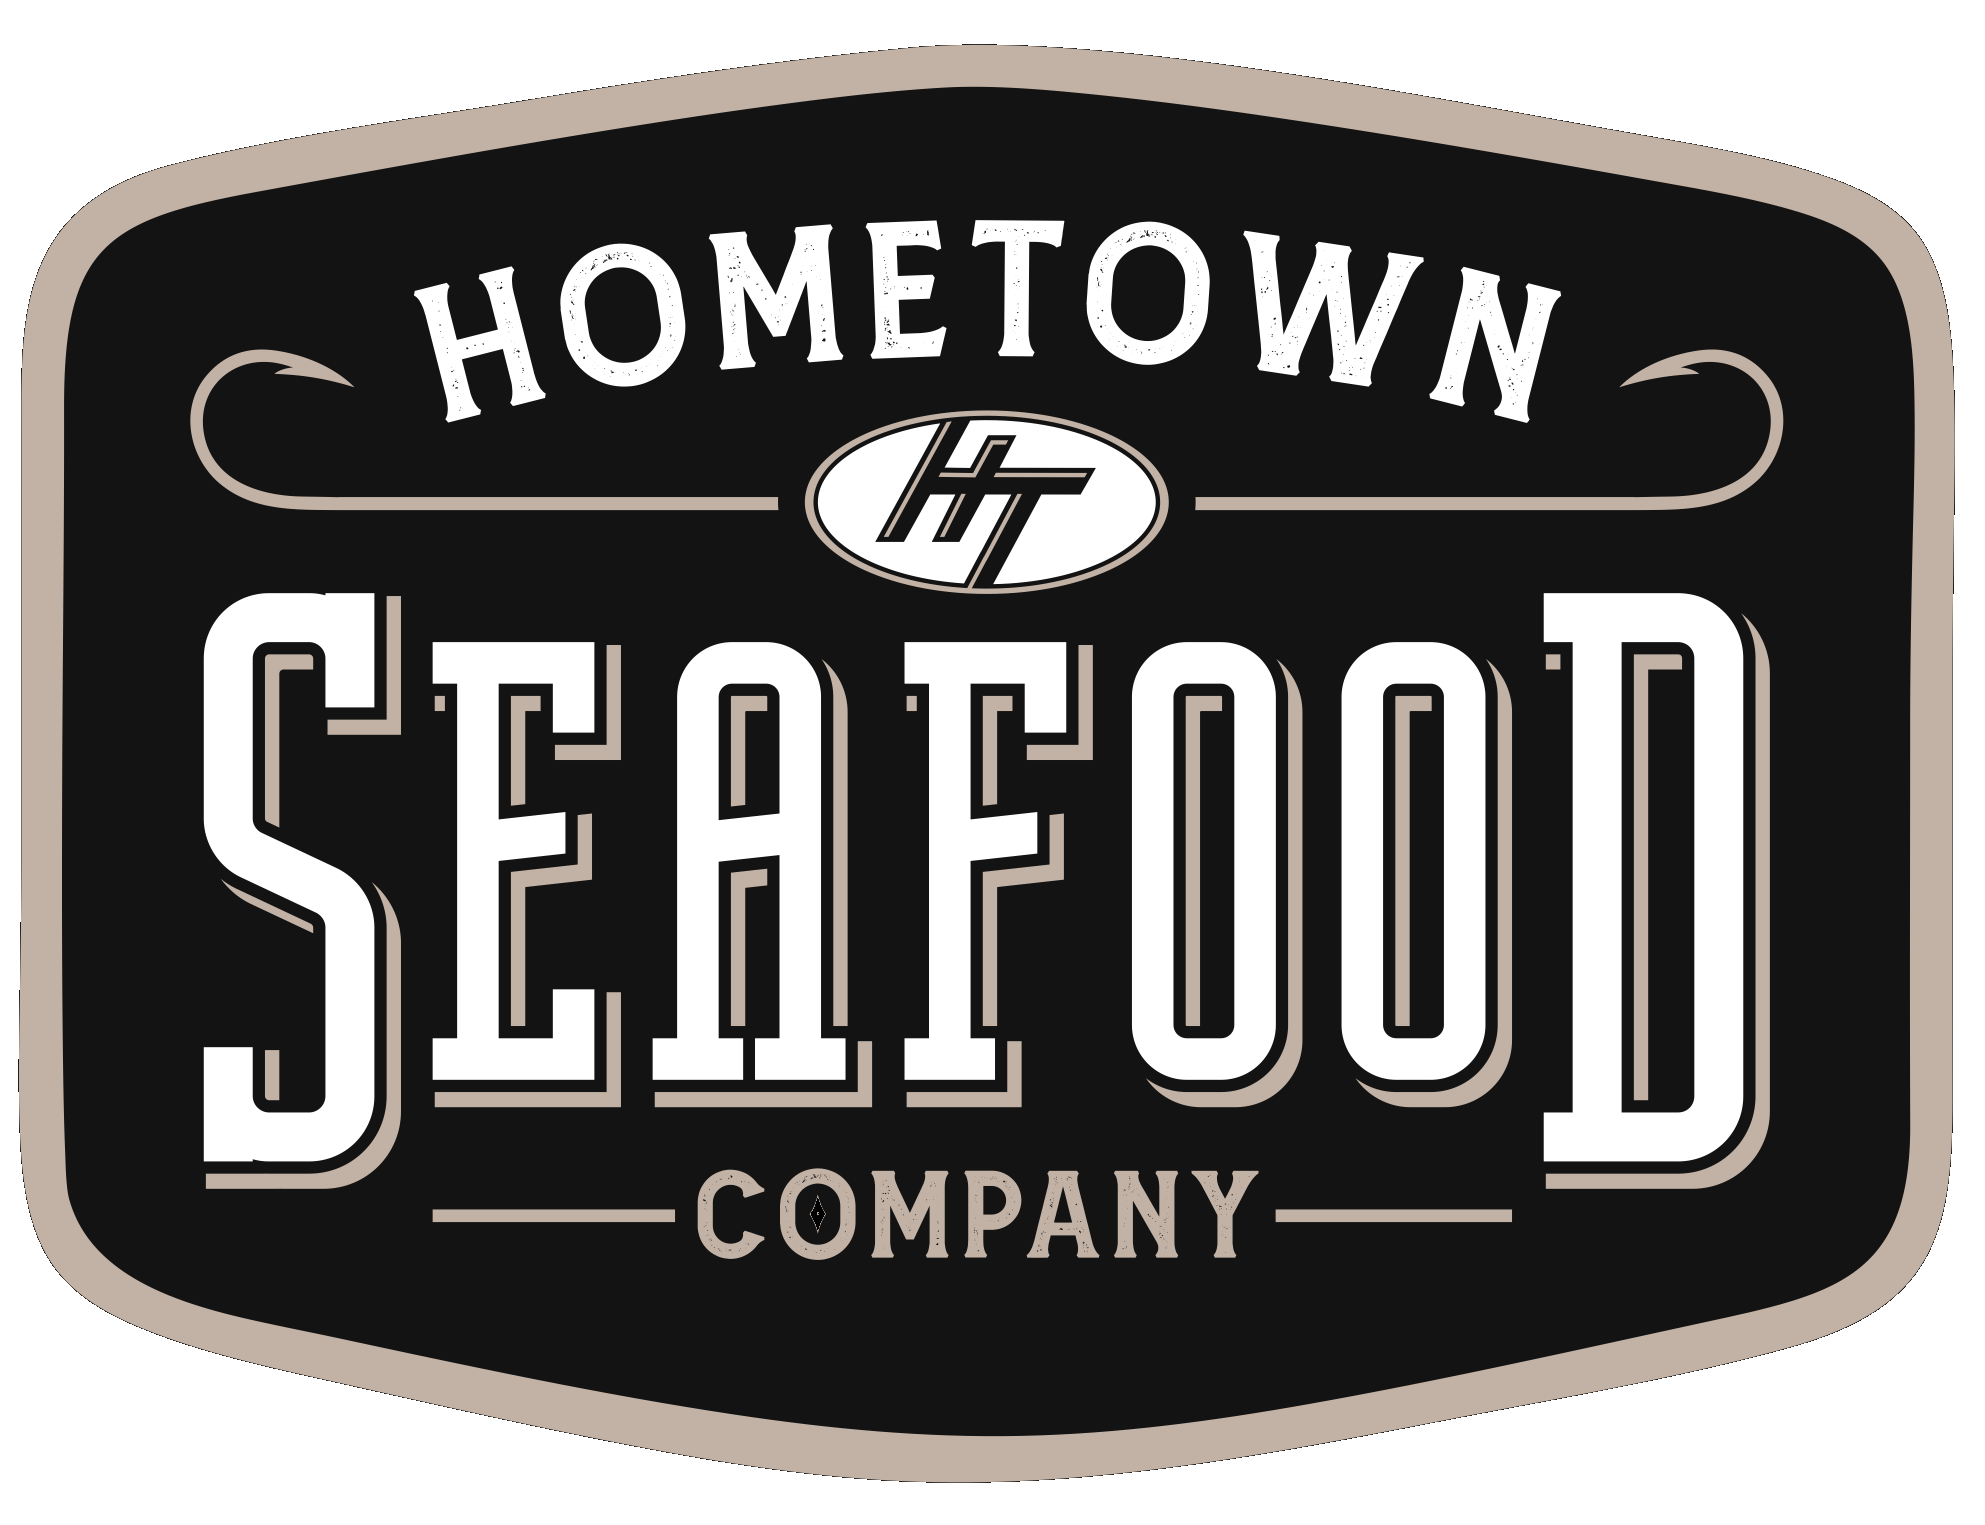 HOMETOWN SEAFOOD LLC